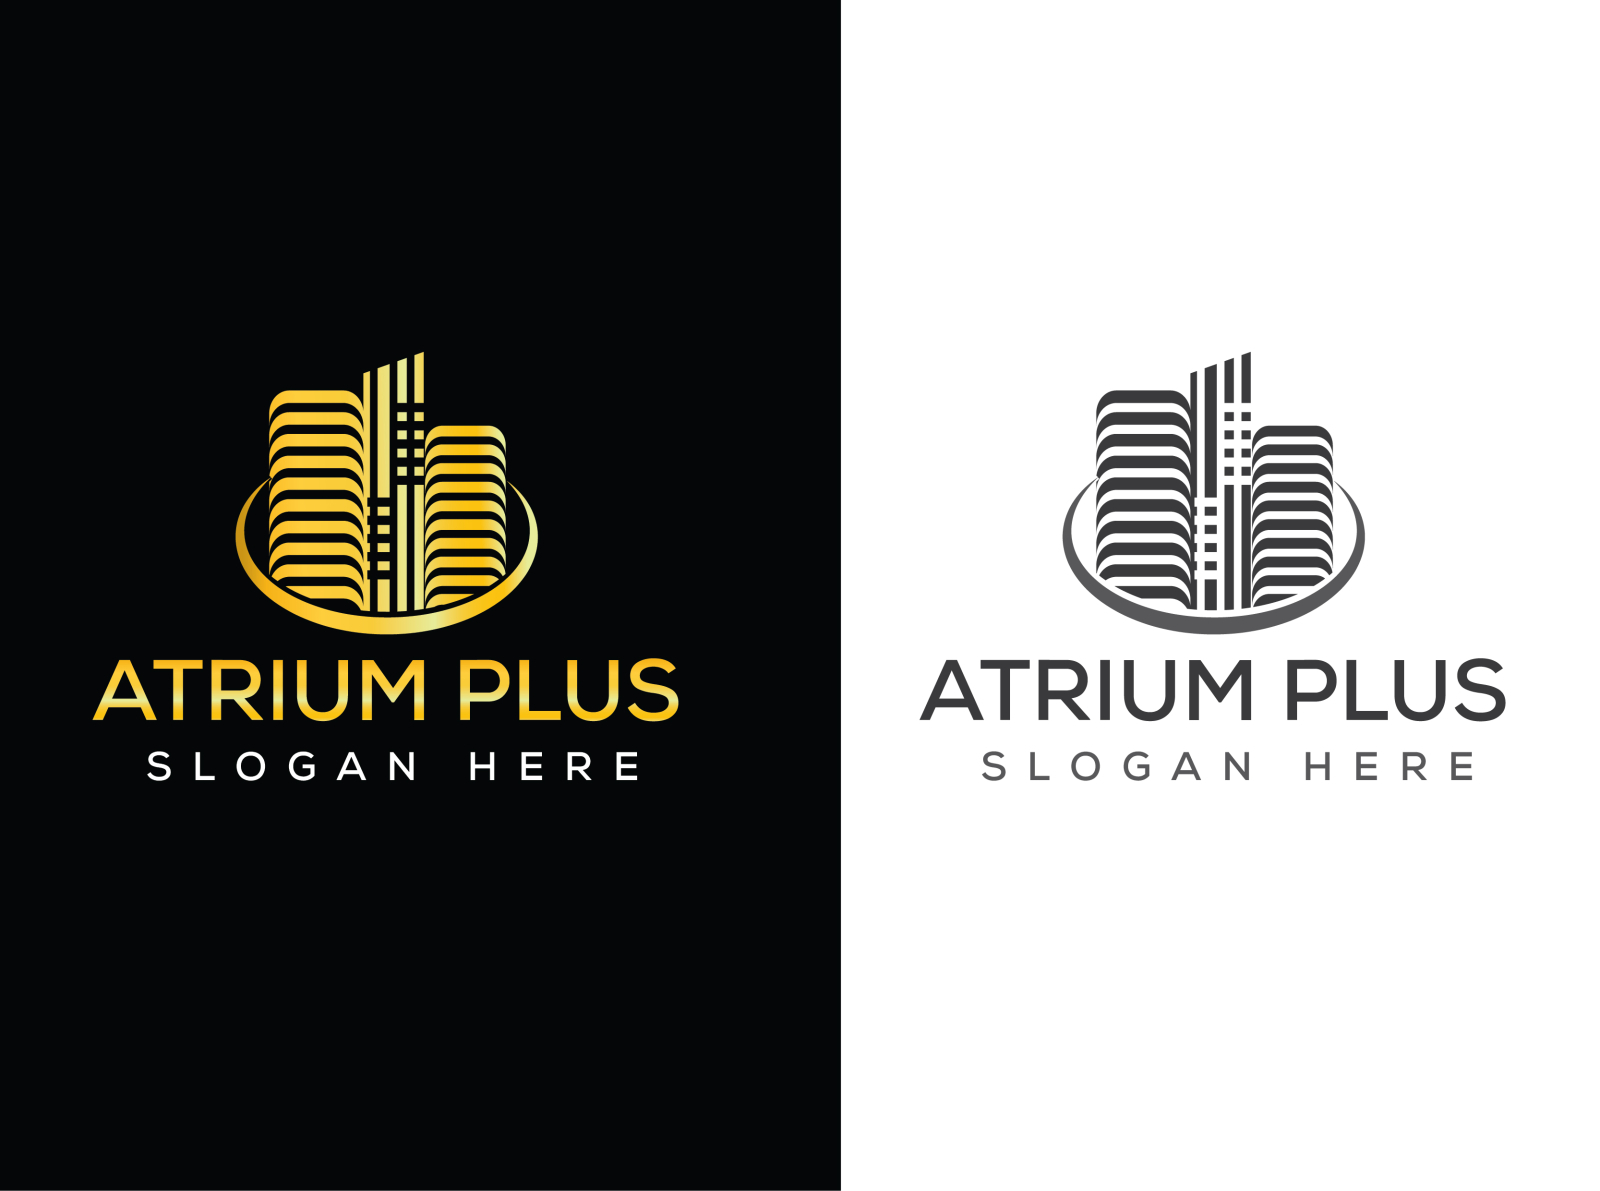 Atrium Plus Real Estate Company logo by Oasiuddin Ahmed on Dribbble